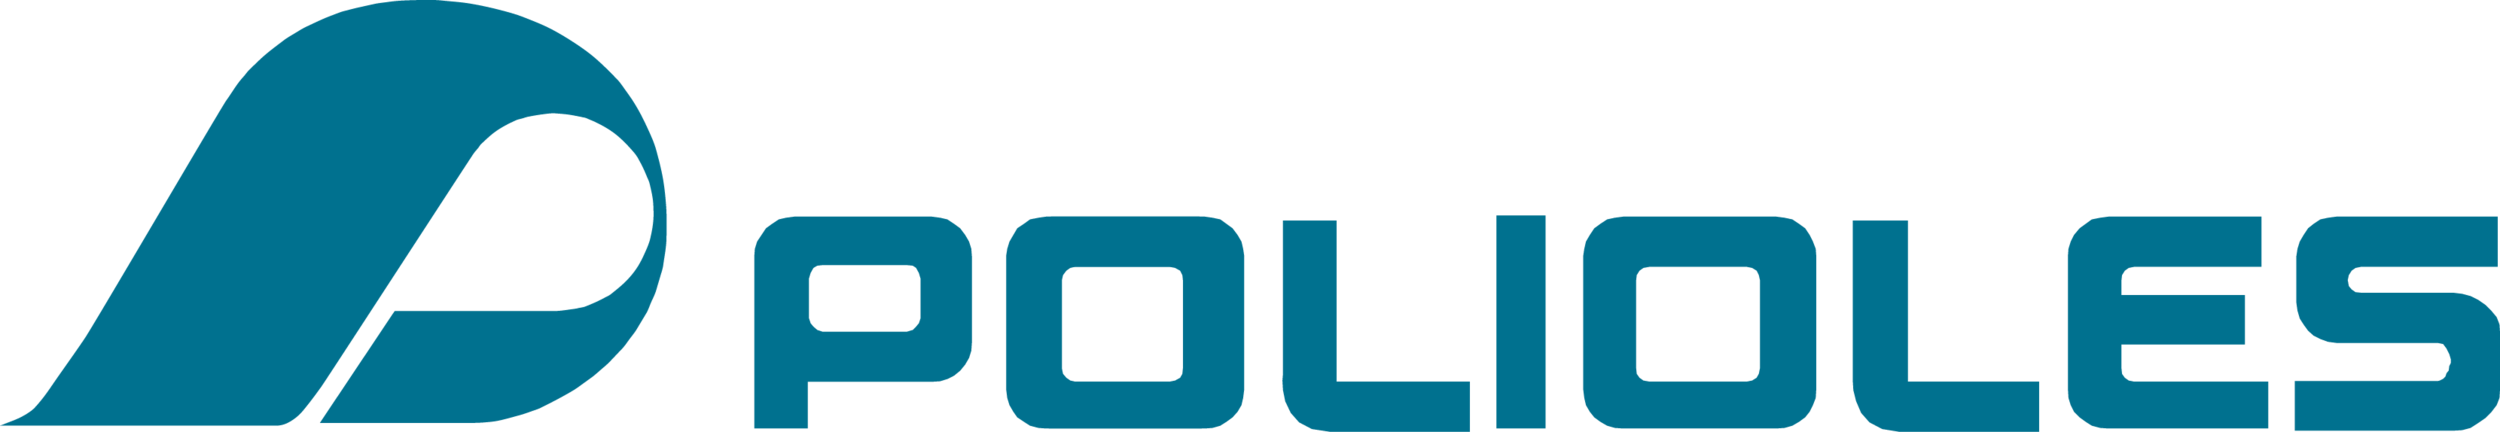 Logo POLIOLES 02.png